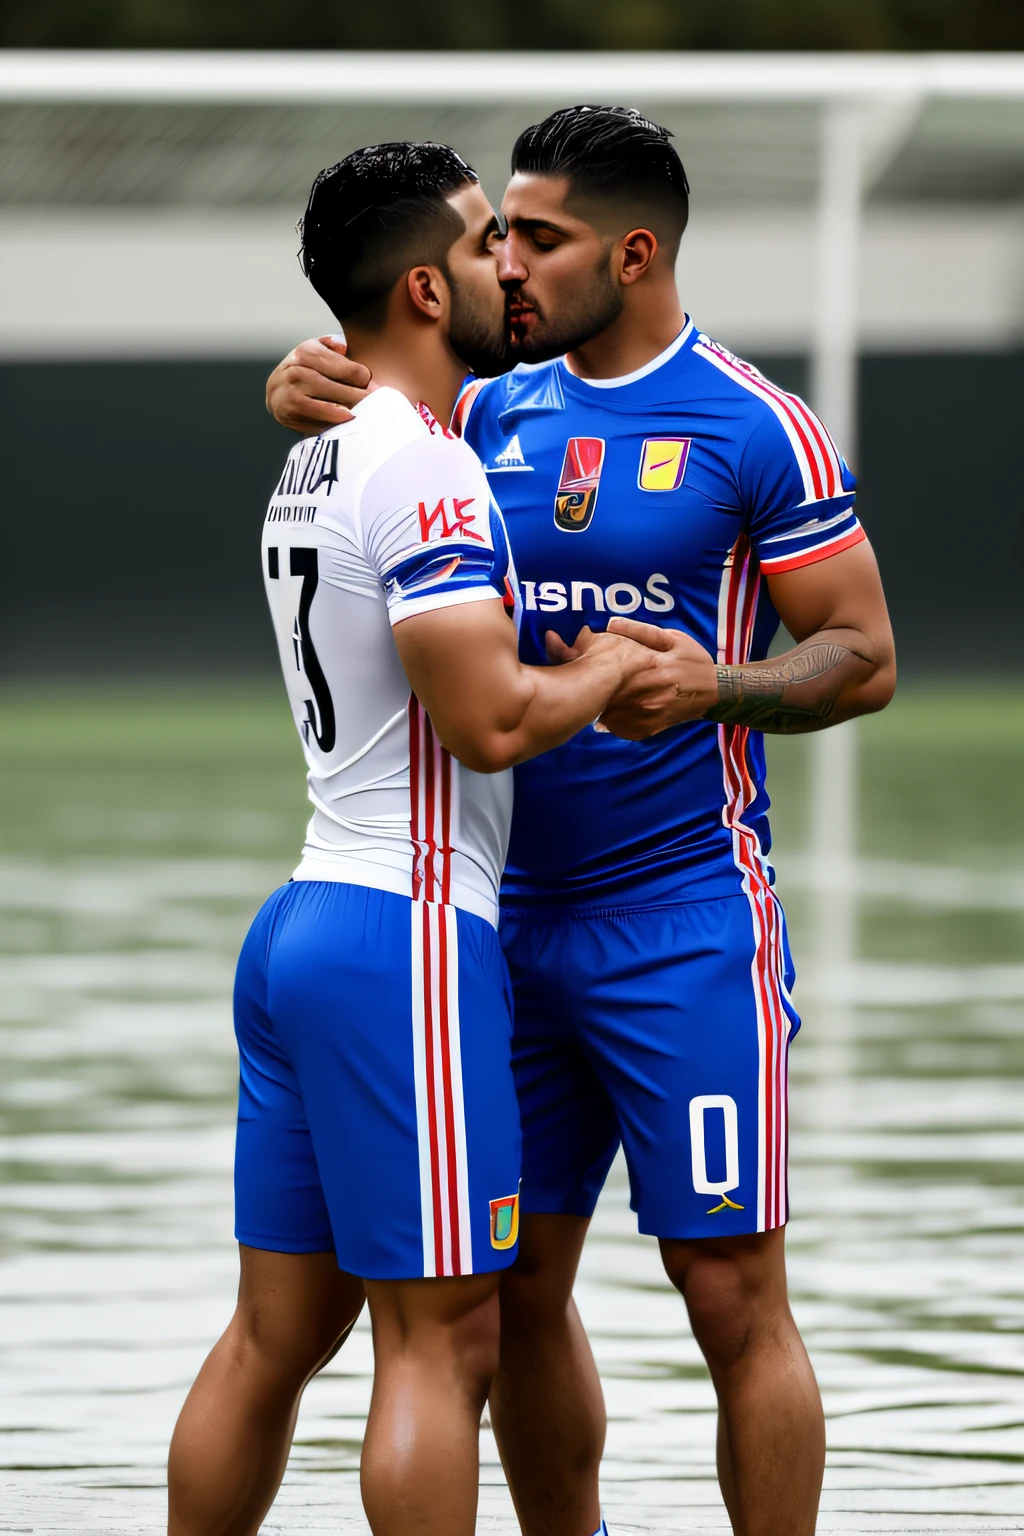 Emiliano and Fernando Vargas kiss in wet soccer kit